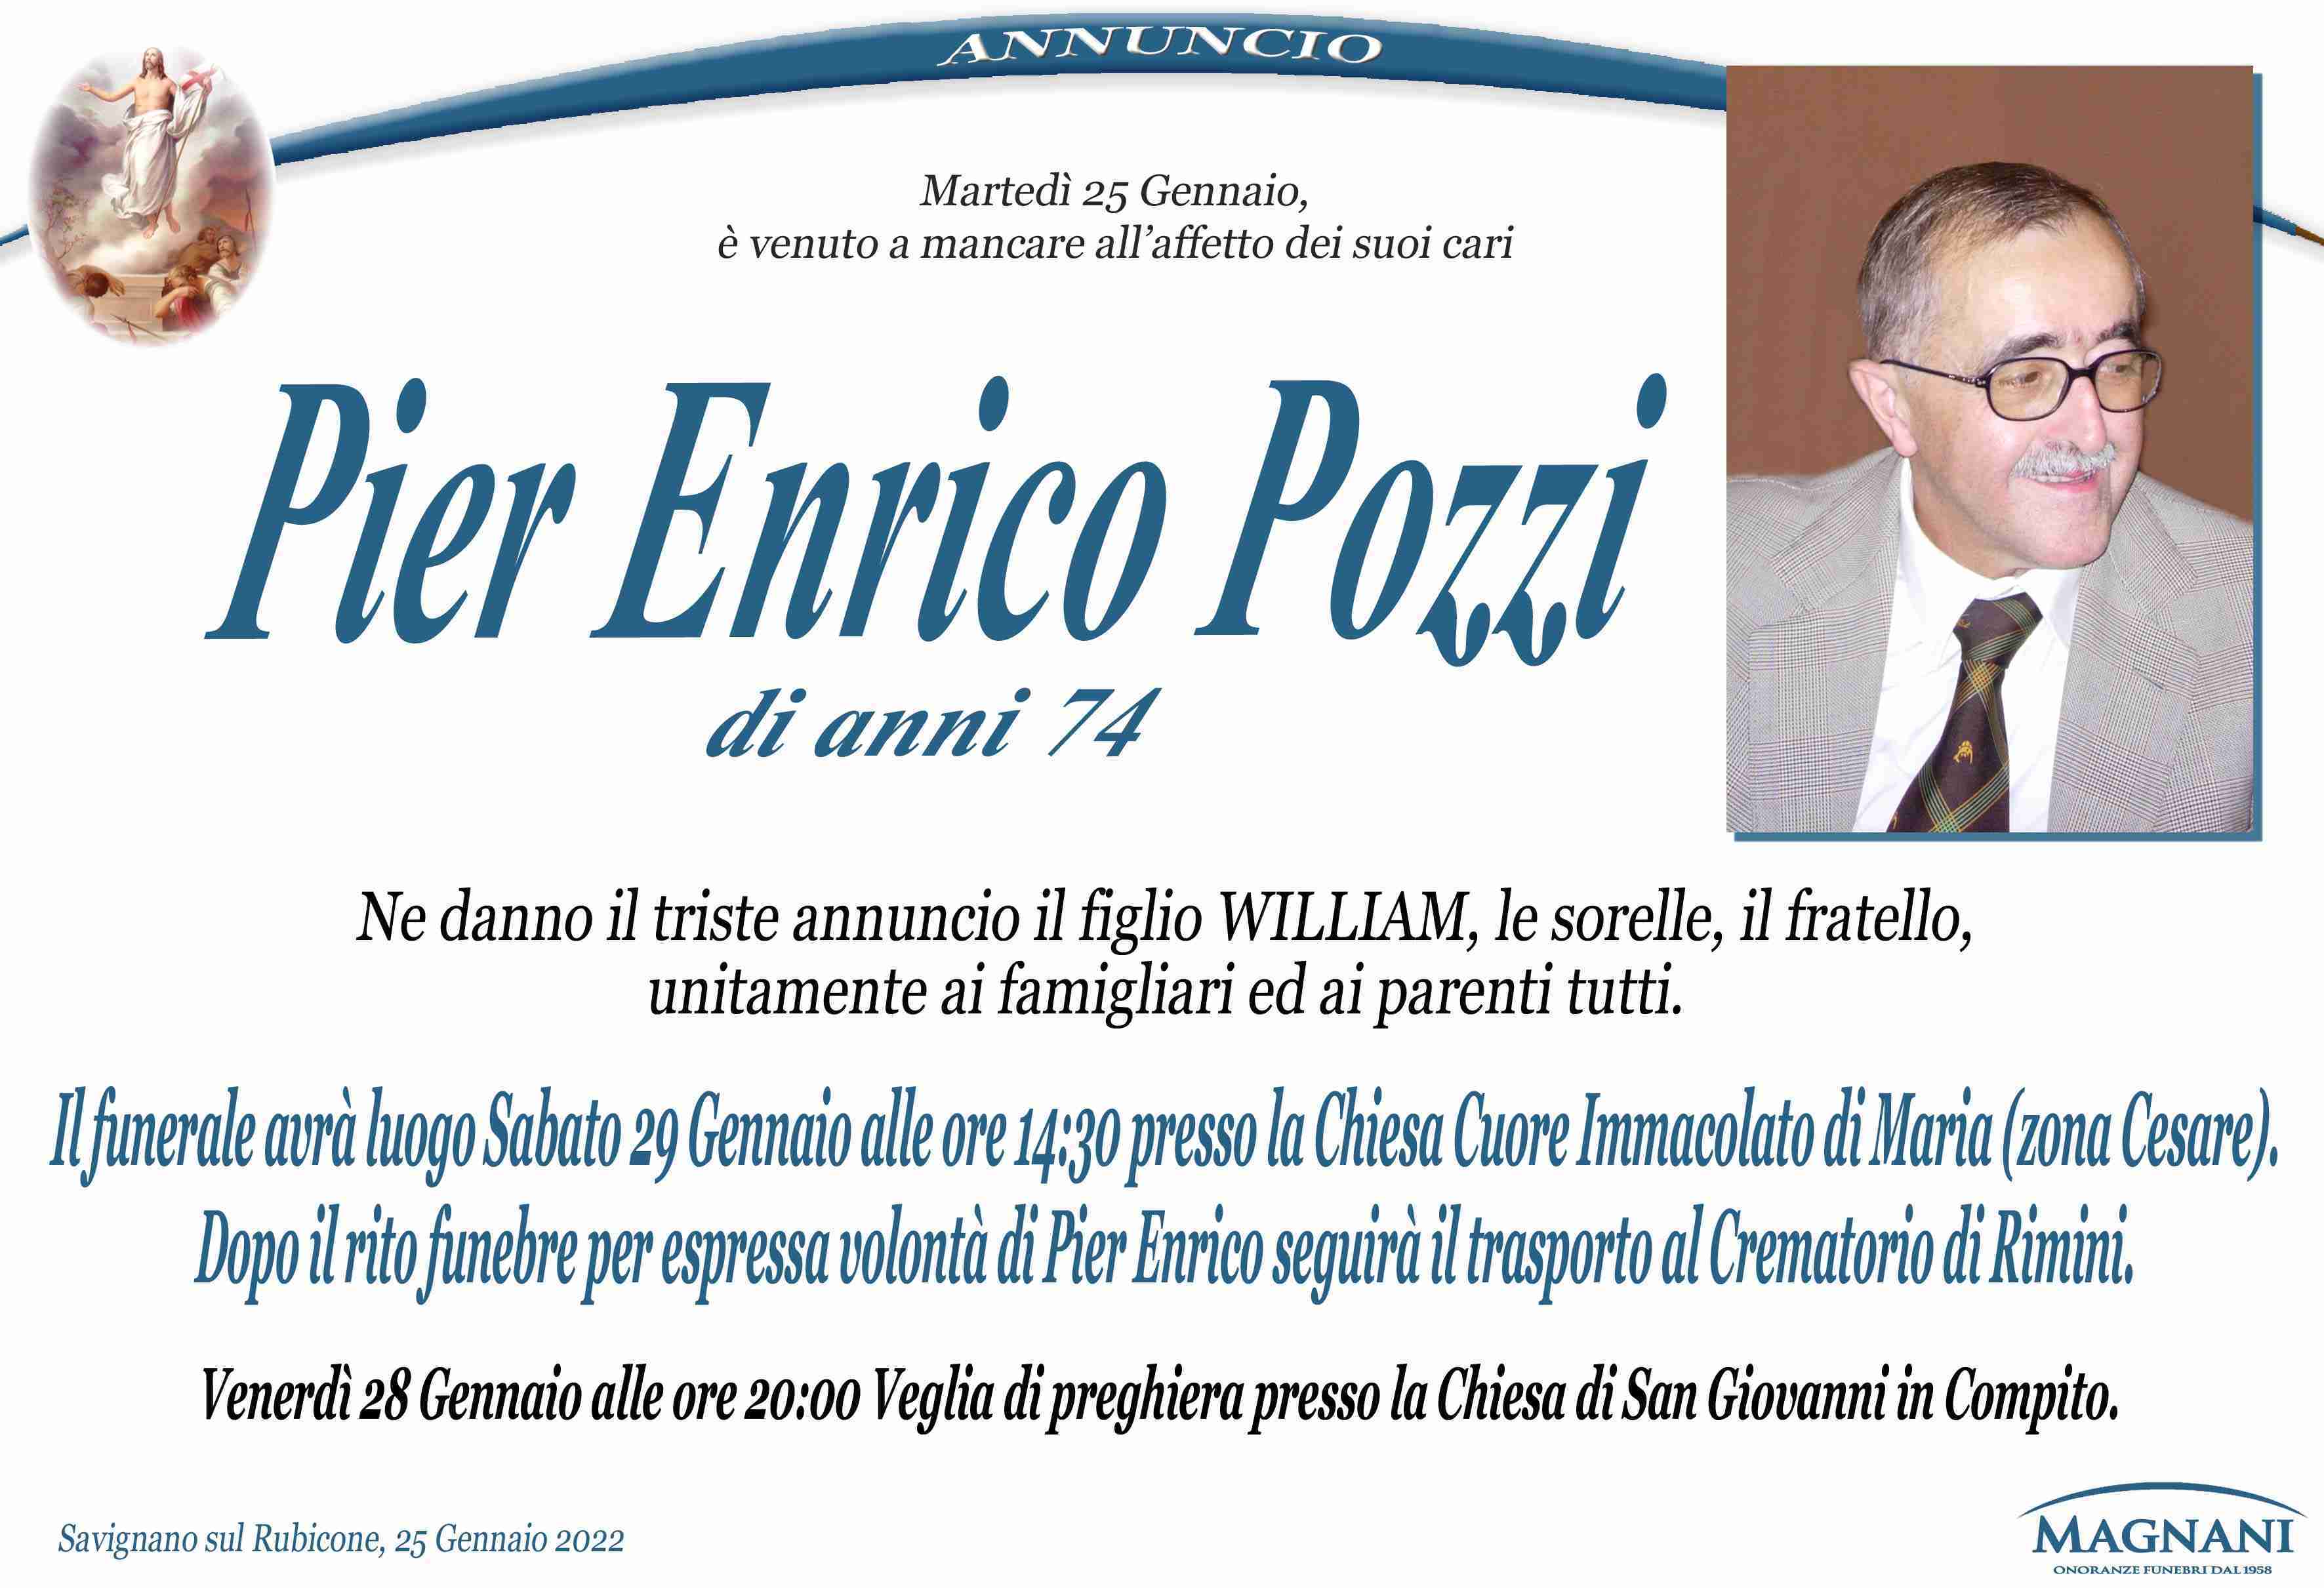 Pier Enrico Pozzi